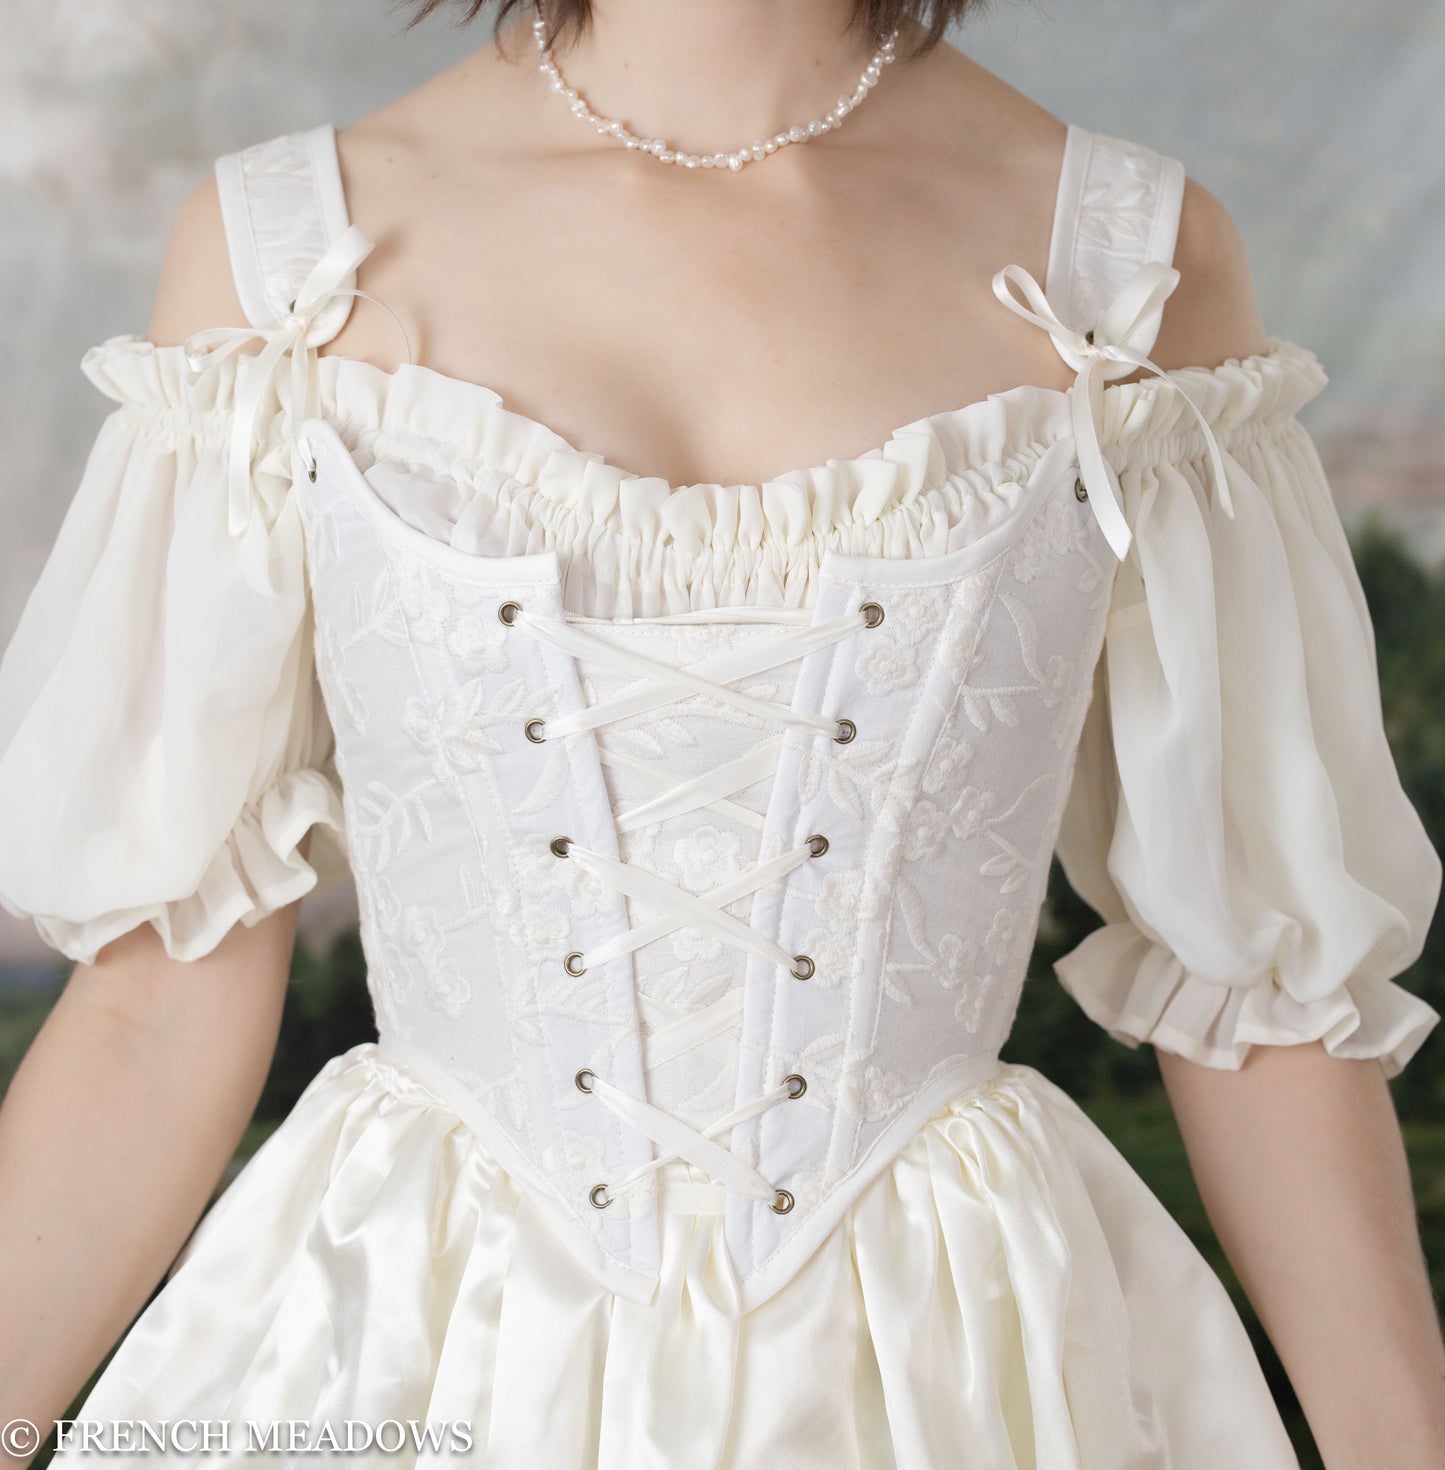 Renaissance Dress Wedding Gown Corset Chemise Pirate Medieval LARP Costume  White 